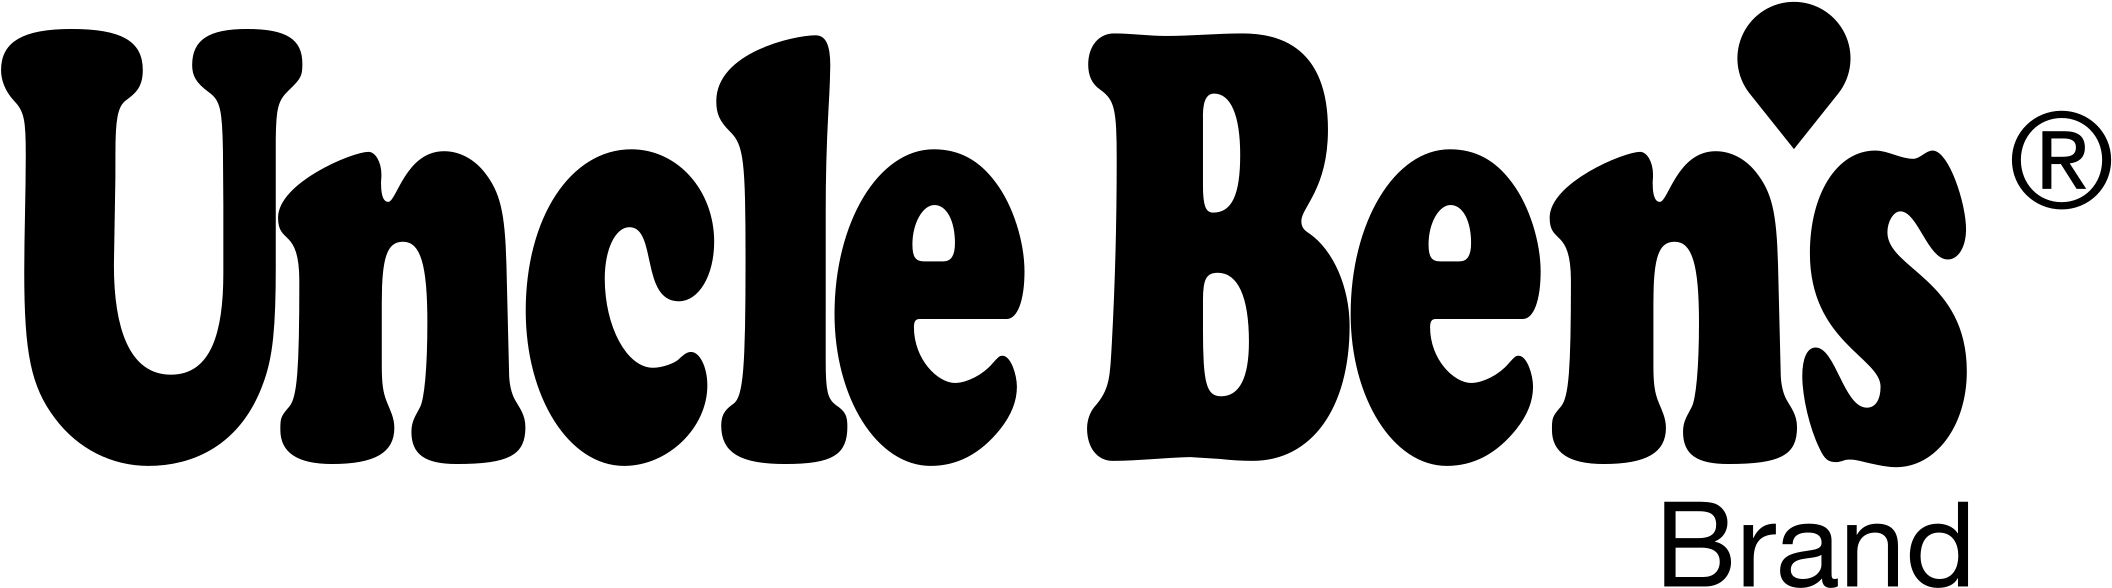 Uncle Ben's Logo Png Transparent - Uncle Ben's Logo Png (2400x2400), Png Download